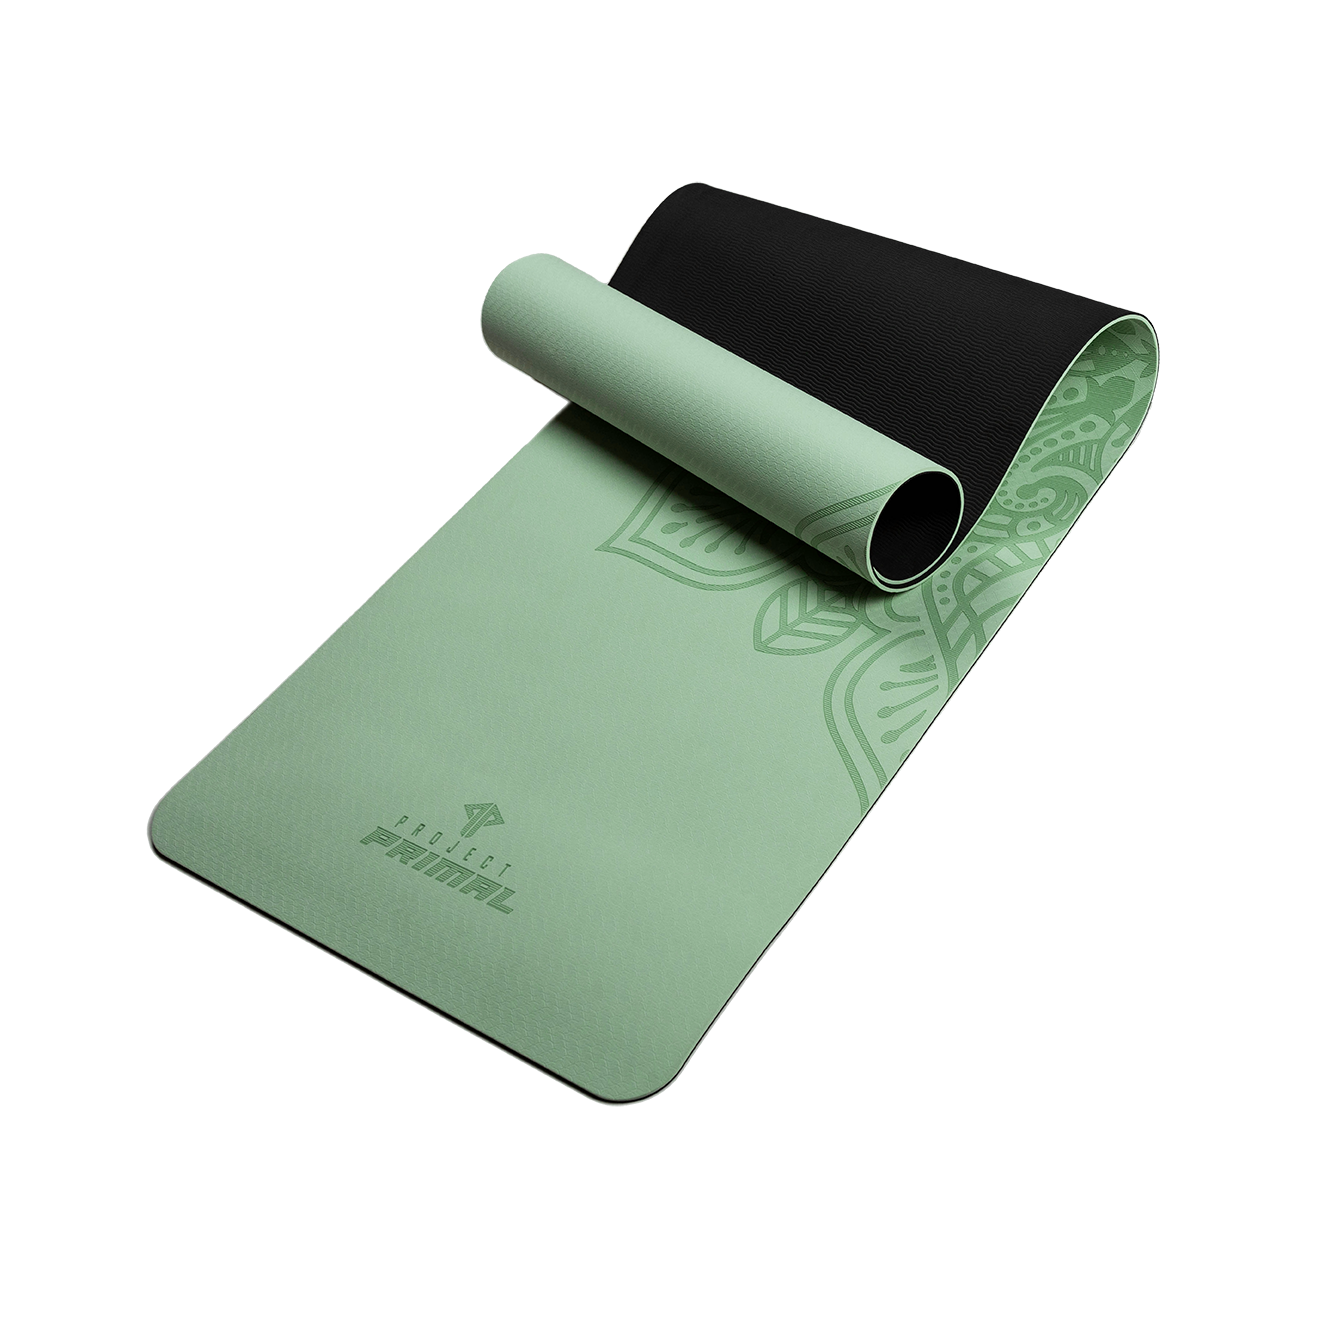 Pastel Green Mandala Edition Yoga Mat